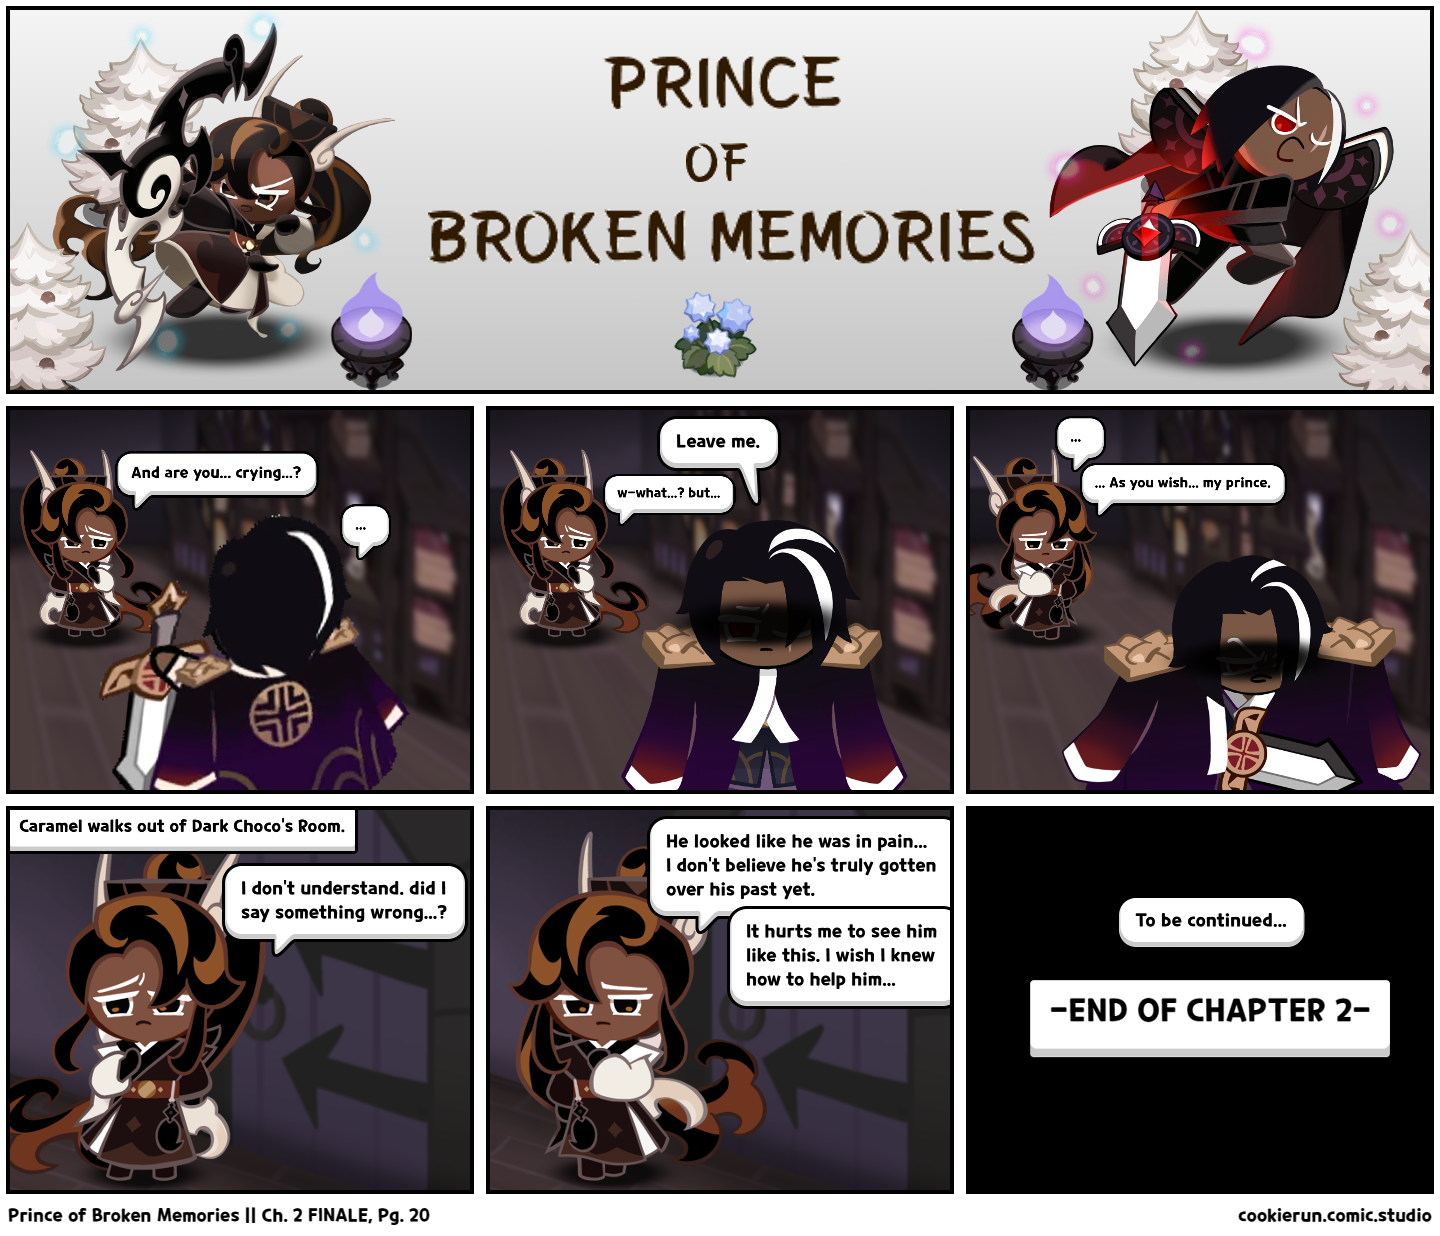 Prince of Broken Memories || Ch. 2 FINALE, Pg. 20